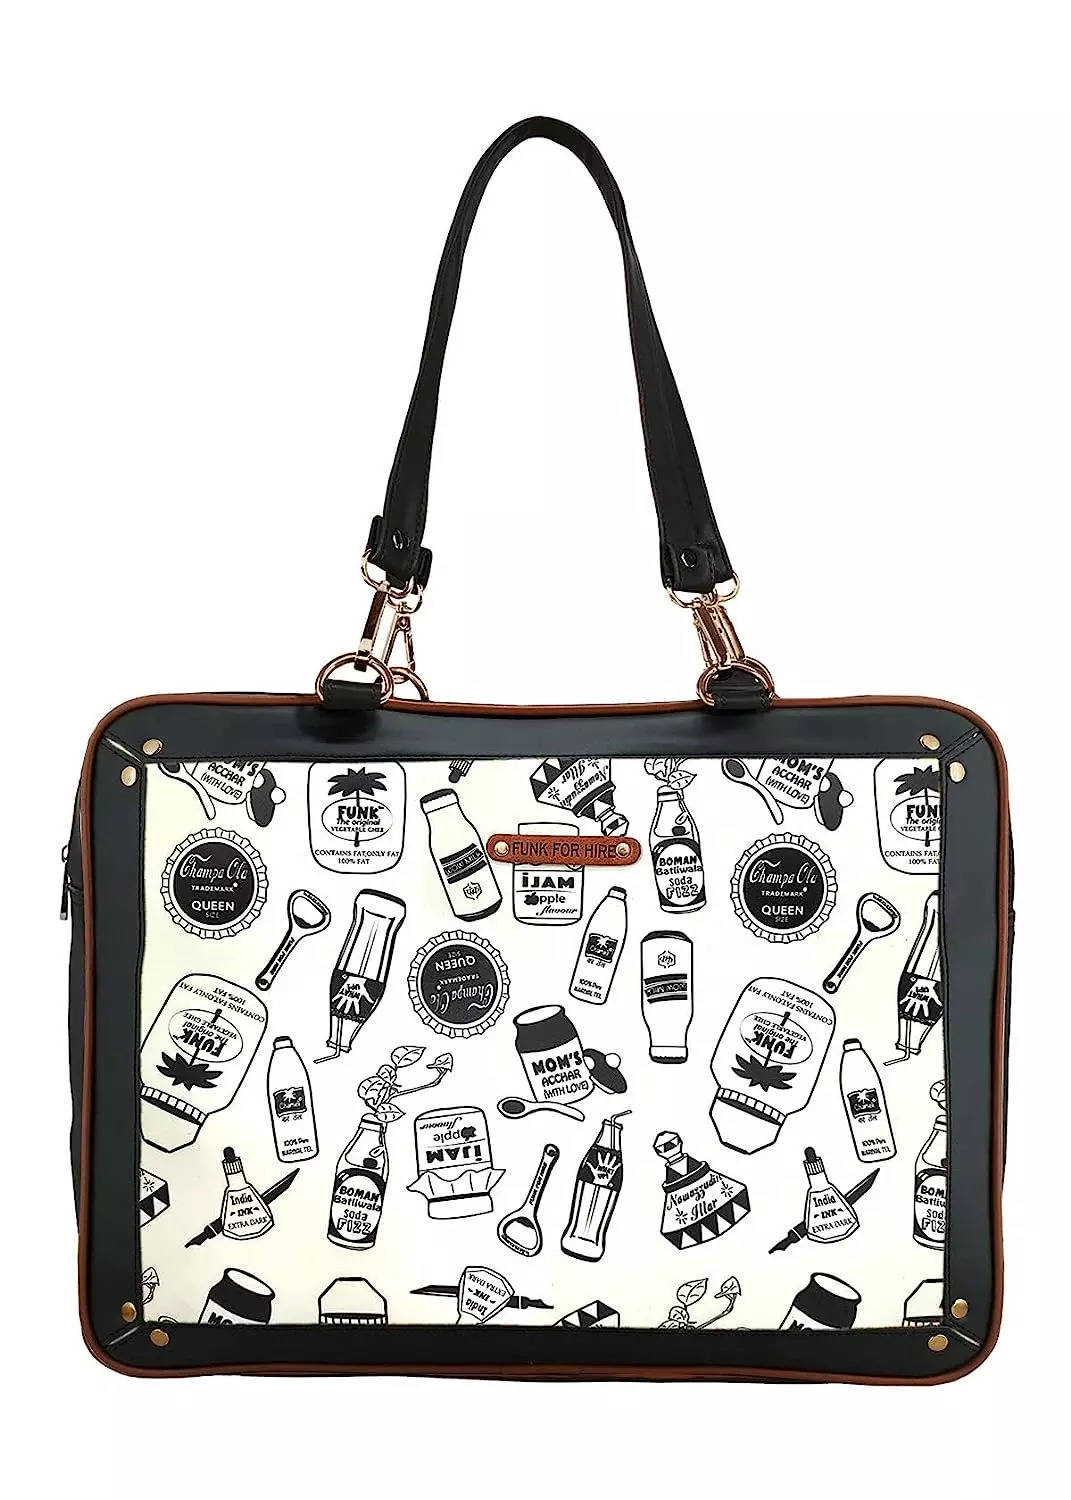 Pin by 🦋SHIREEN🦋 on handbags | Bags, Handbags, Crossbody